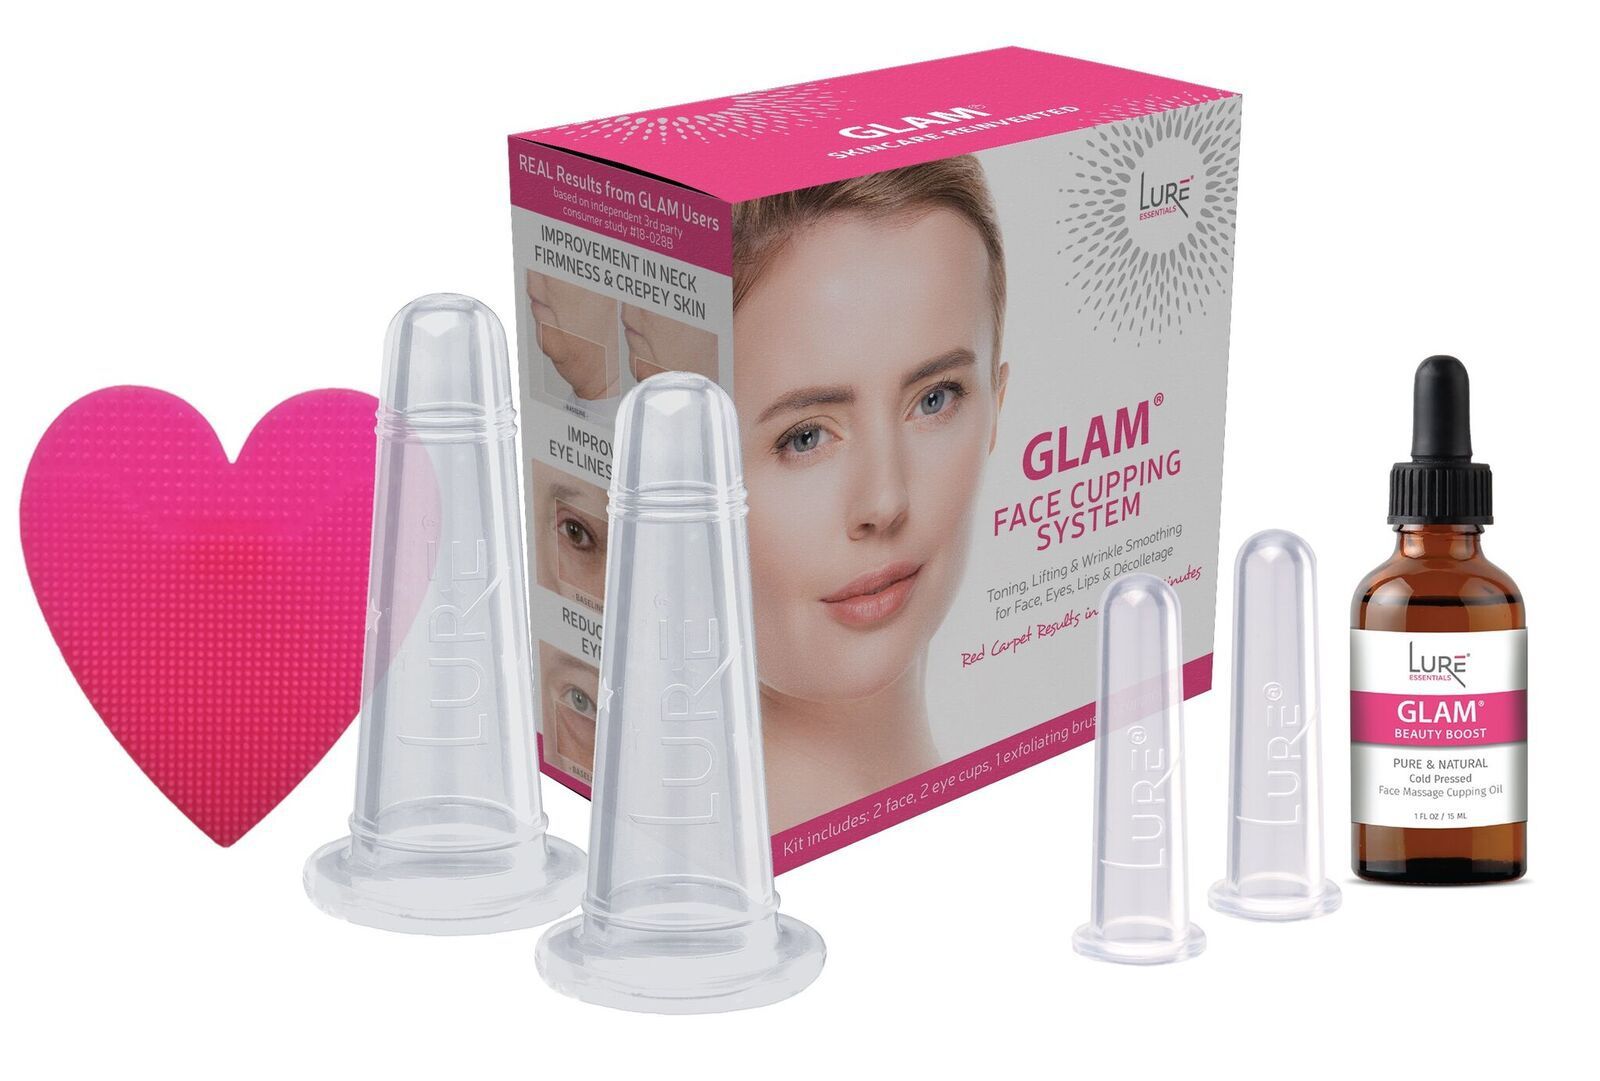 Lure Essentials Glam Facial Cupping Set